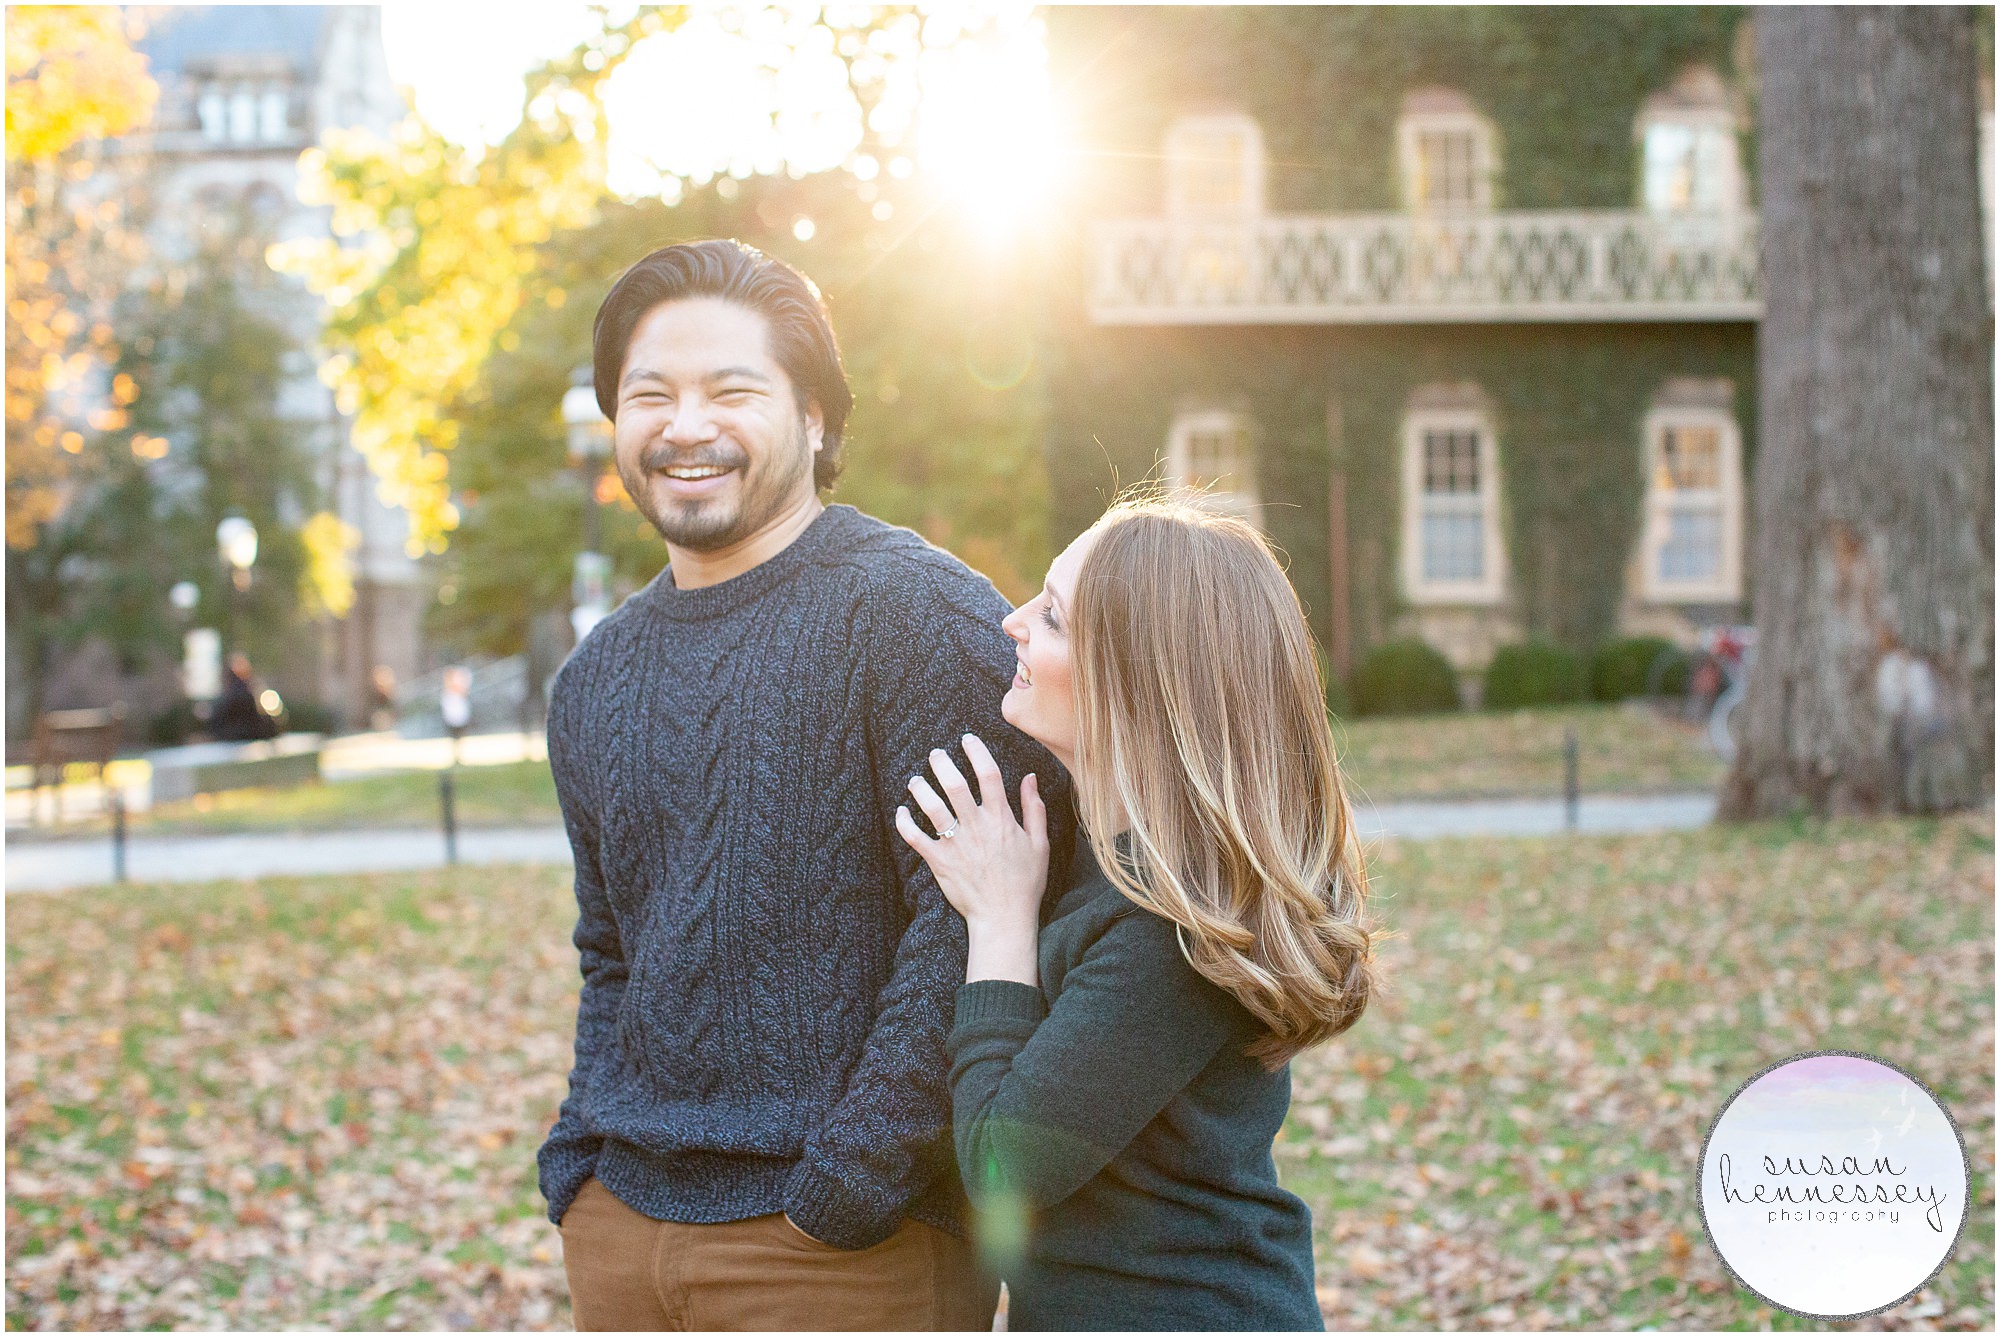 A happily engaged couple at Princeton University